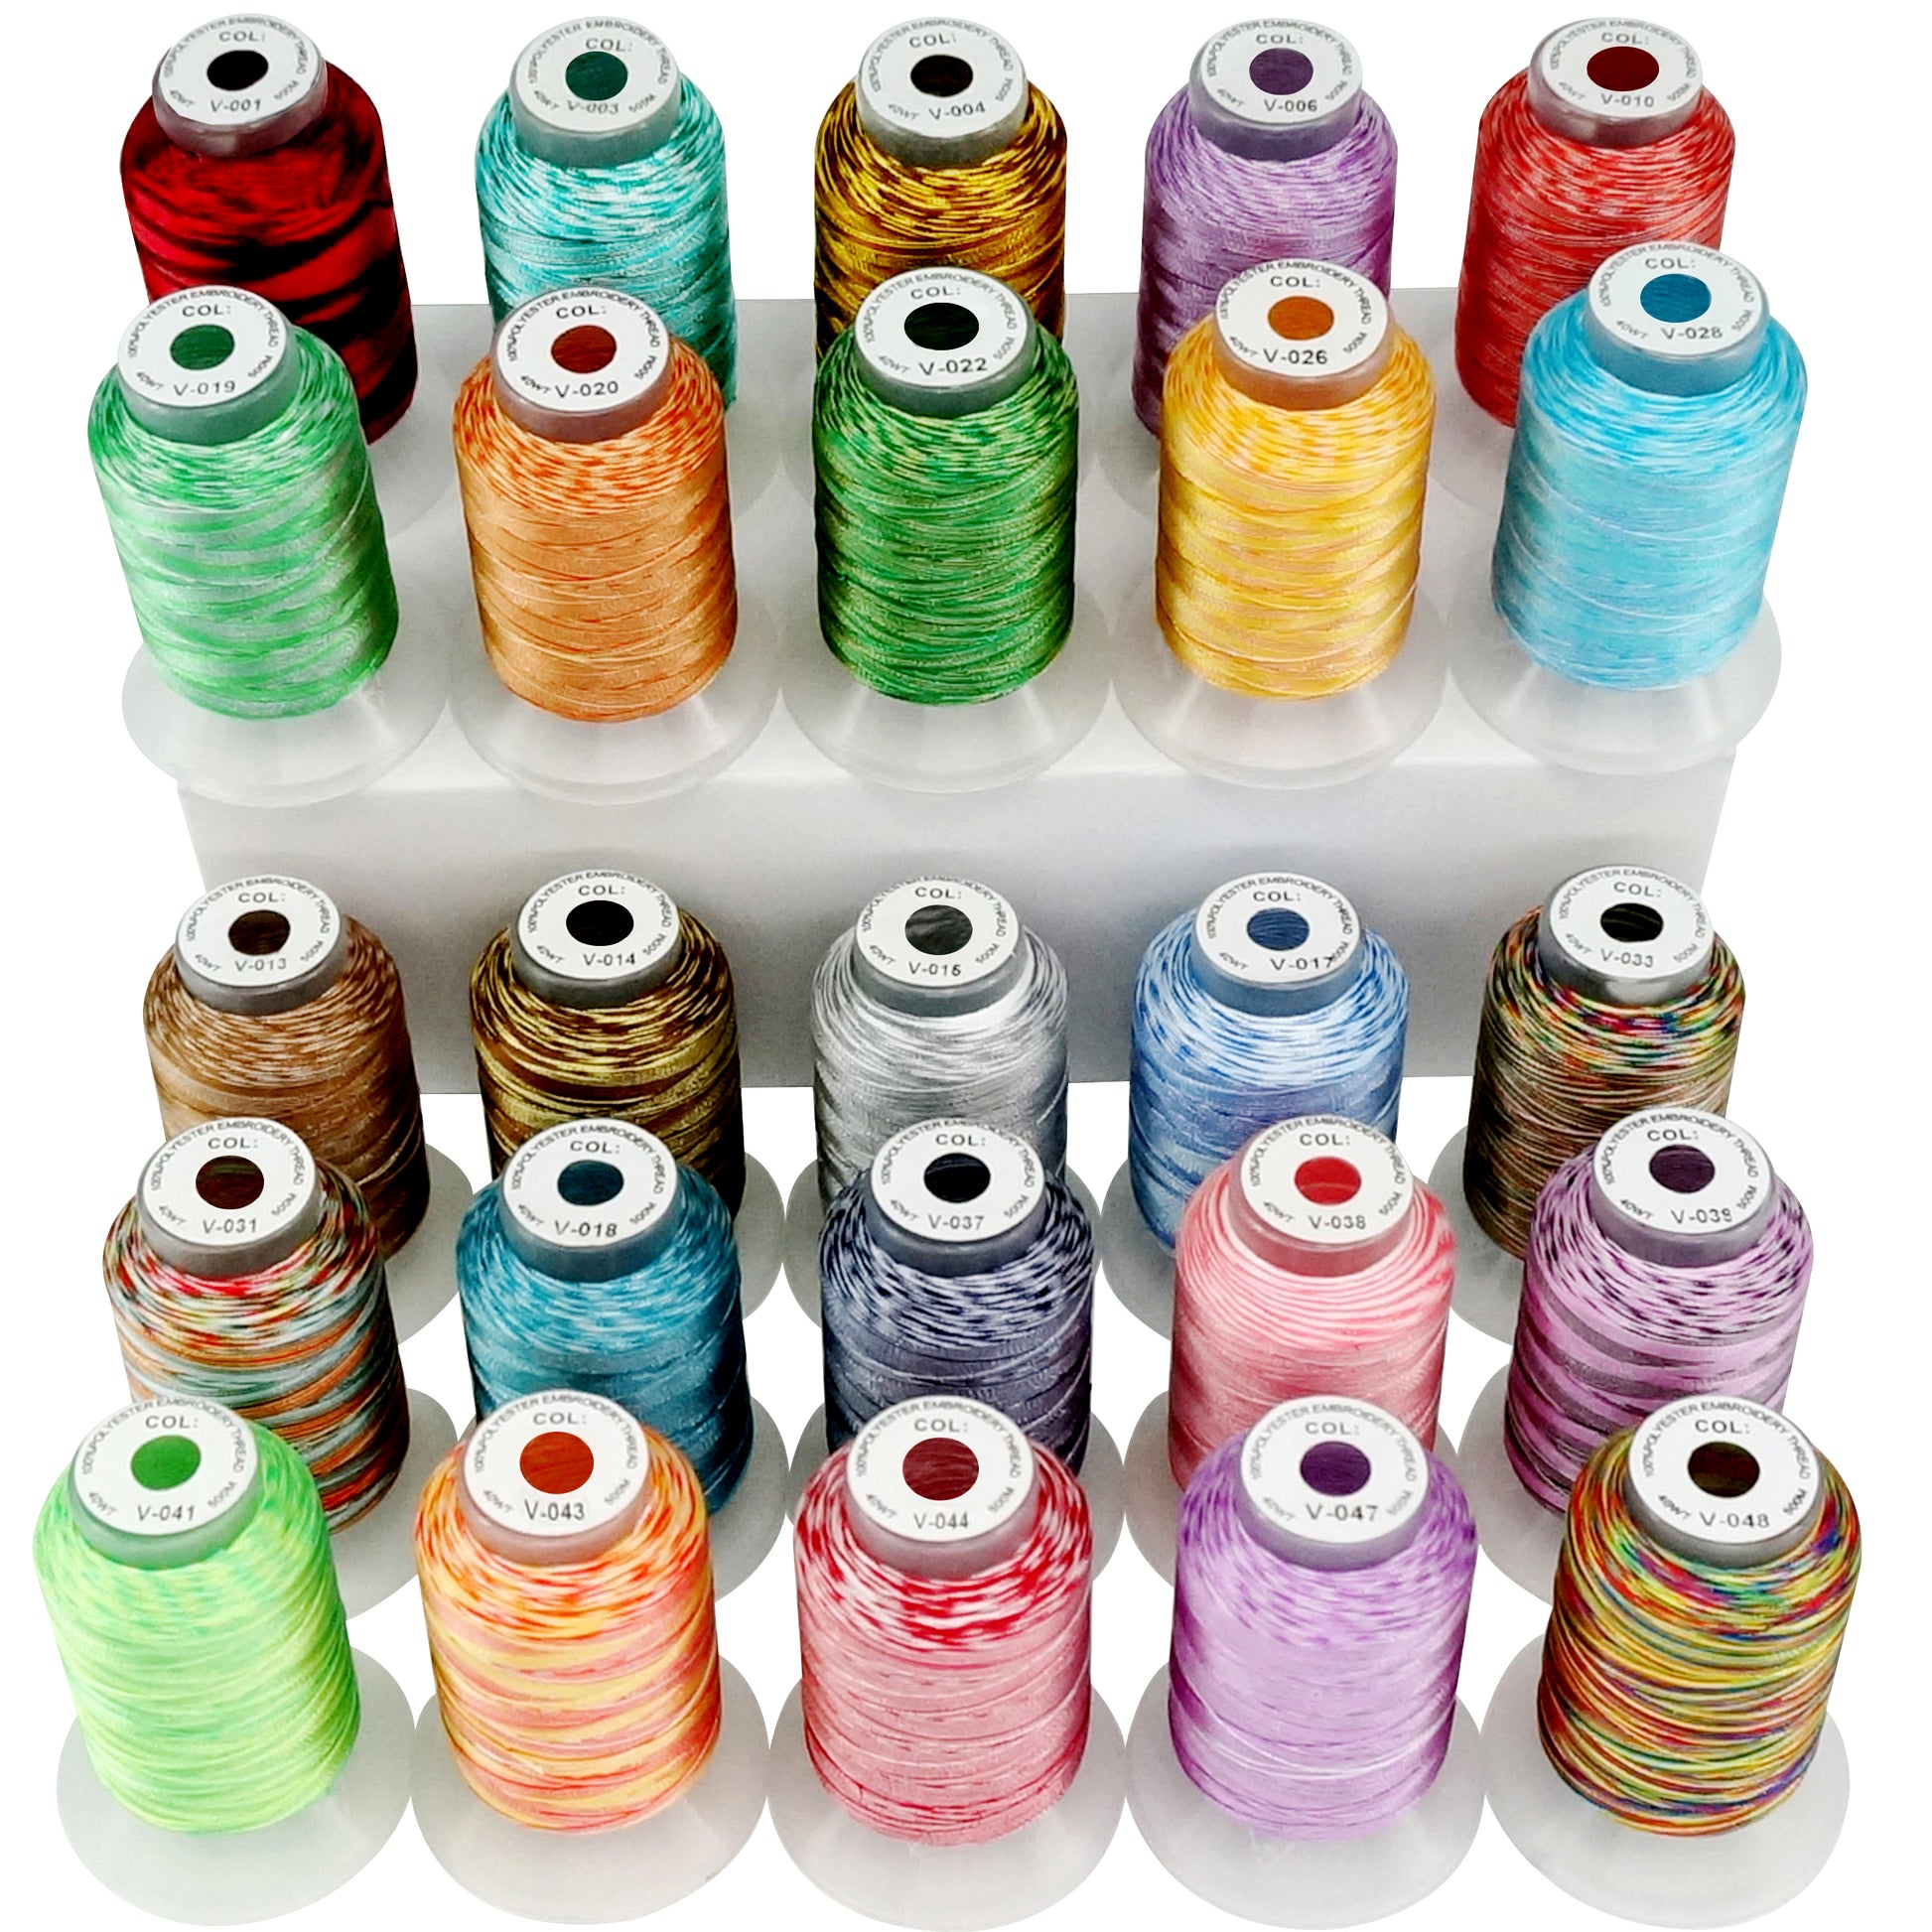  New brothread Polyester Embroidery Machine Thread